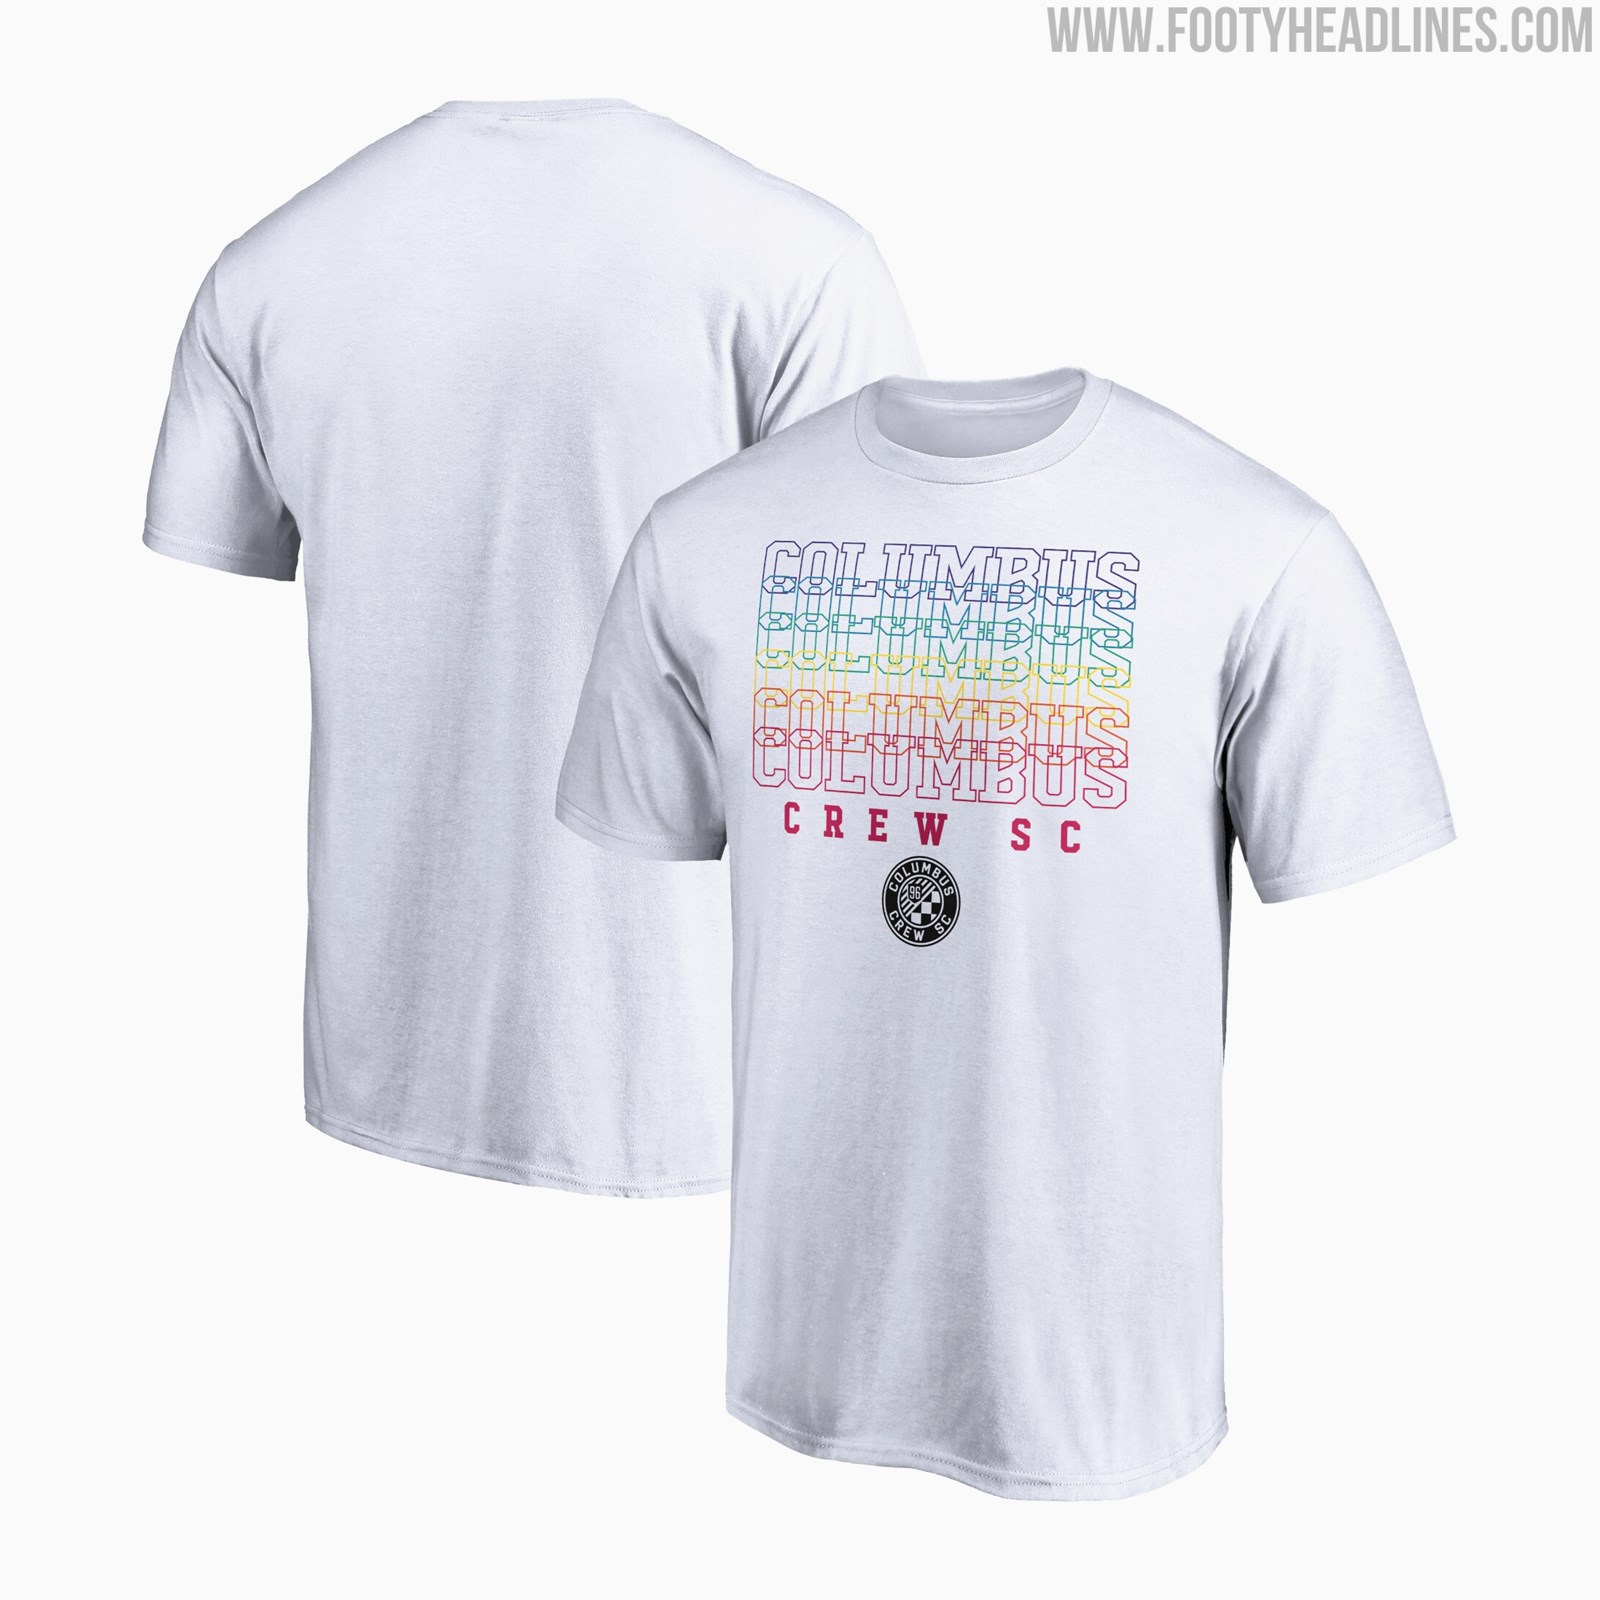 MLS Pride Logo & Adidas 2021 Pre-Match Shirts Released - Footy Headlines